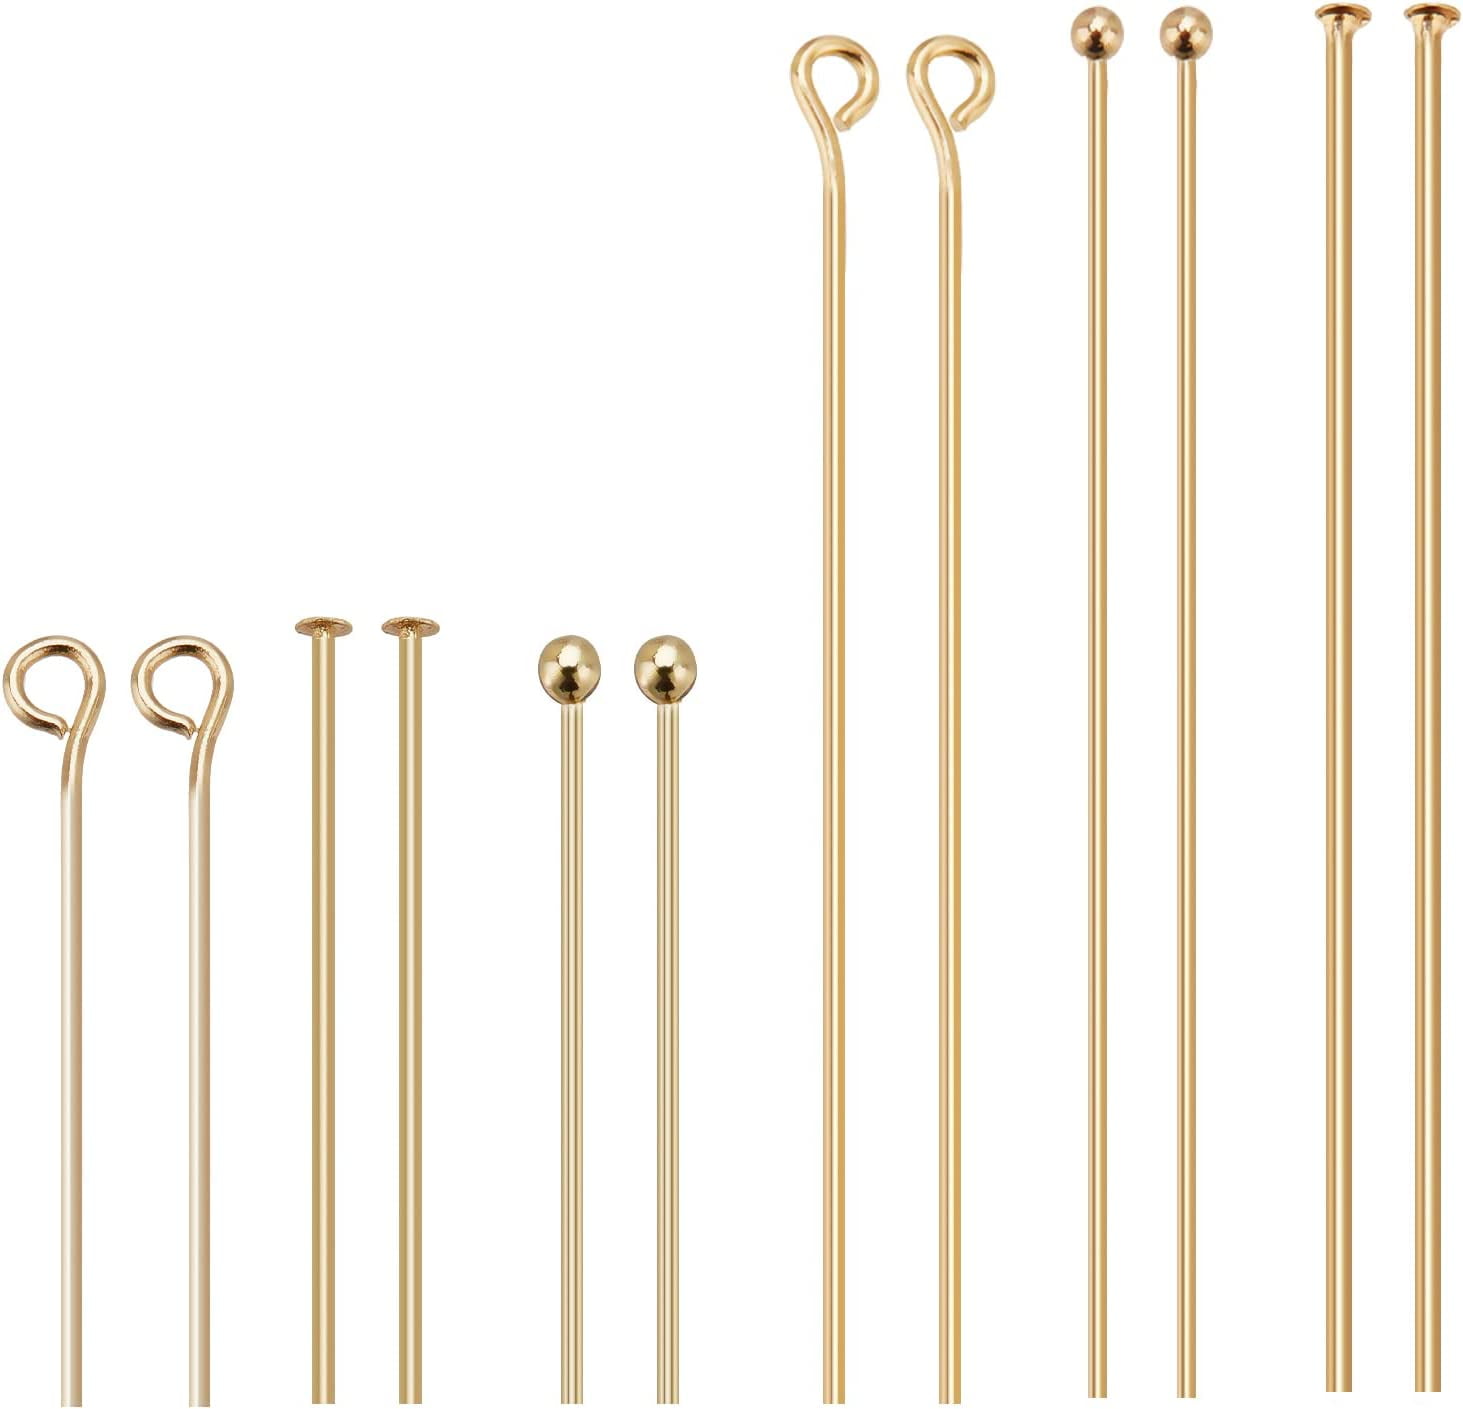 Antique Bronze Solid Brass Flat Head Pins for Jewelry Making, Earrings- Hypoallergenic (50mm, 21 Gauge) 2 inch